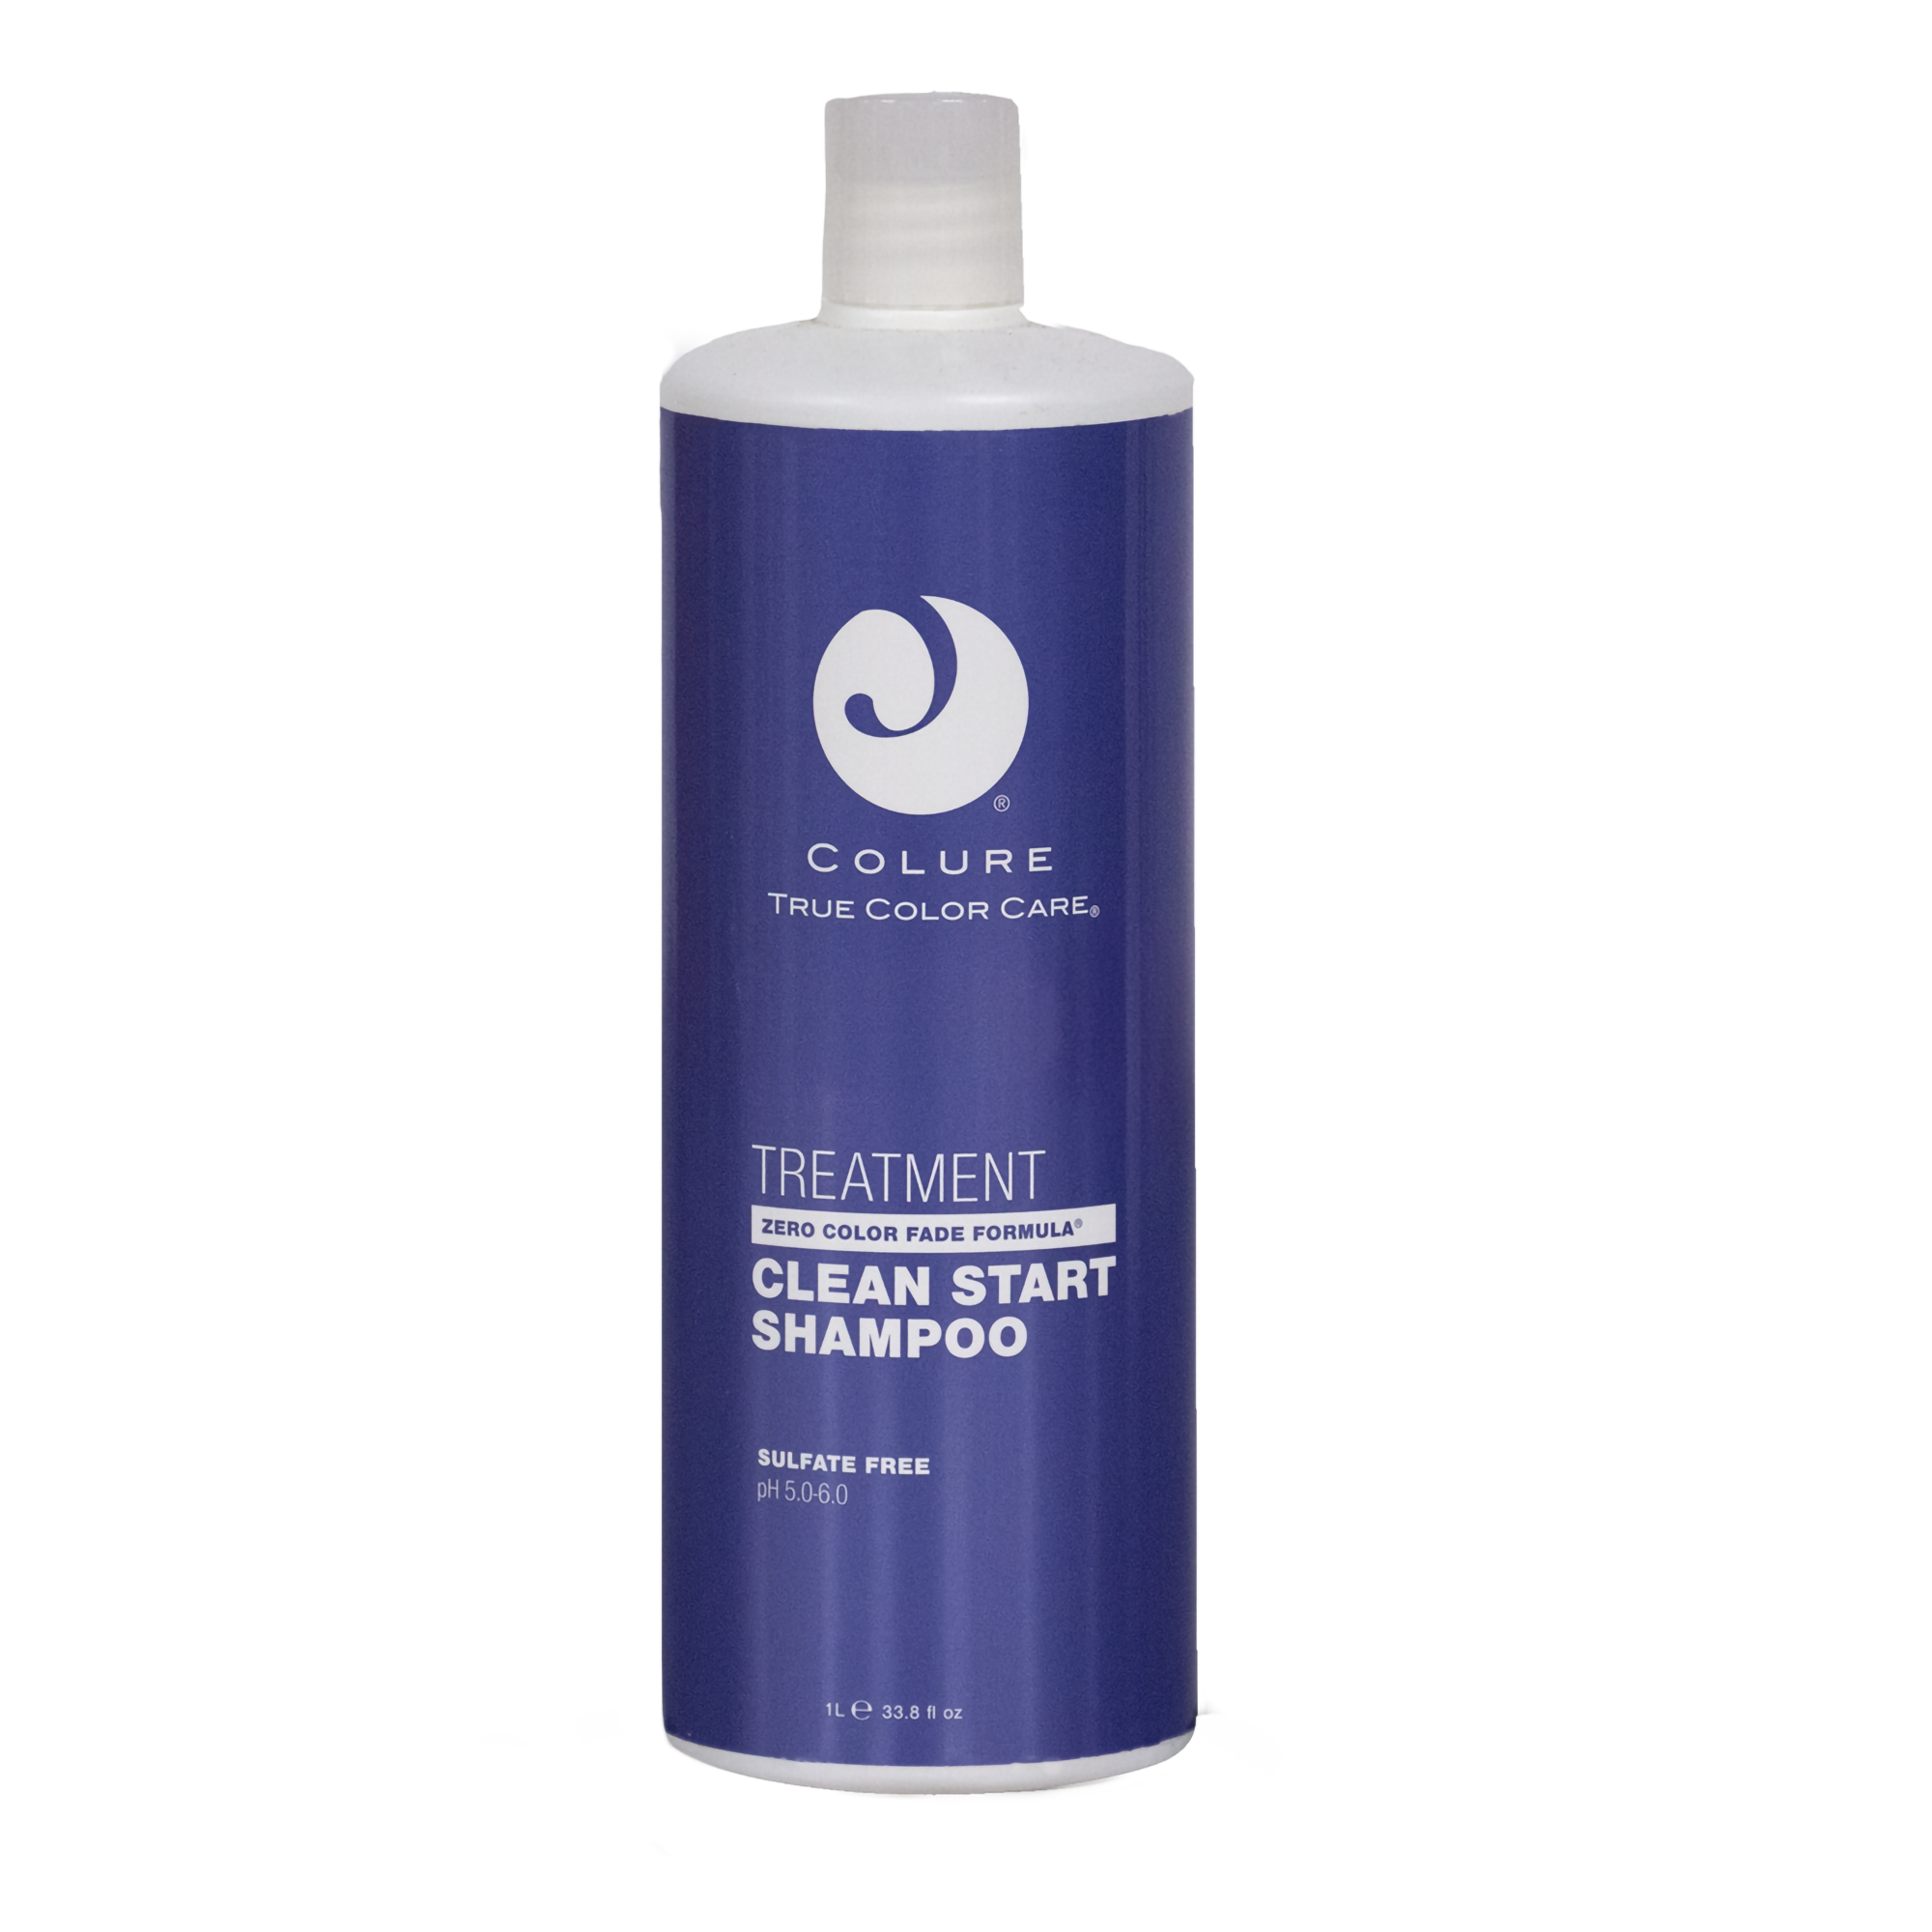 Colure Clean Start Shampoo / 33.8